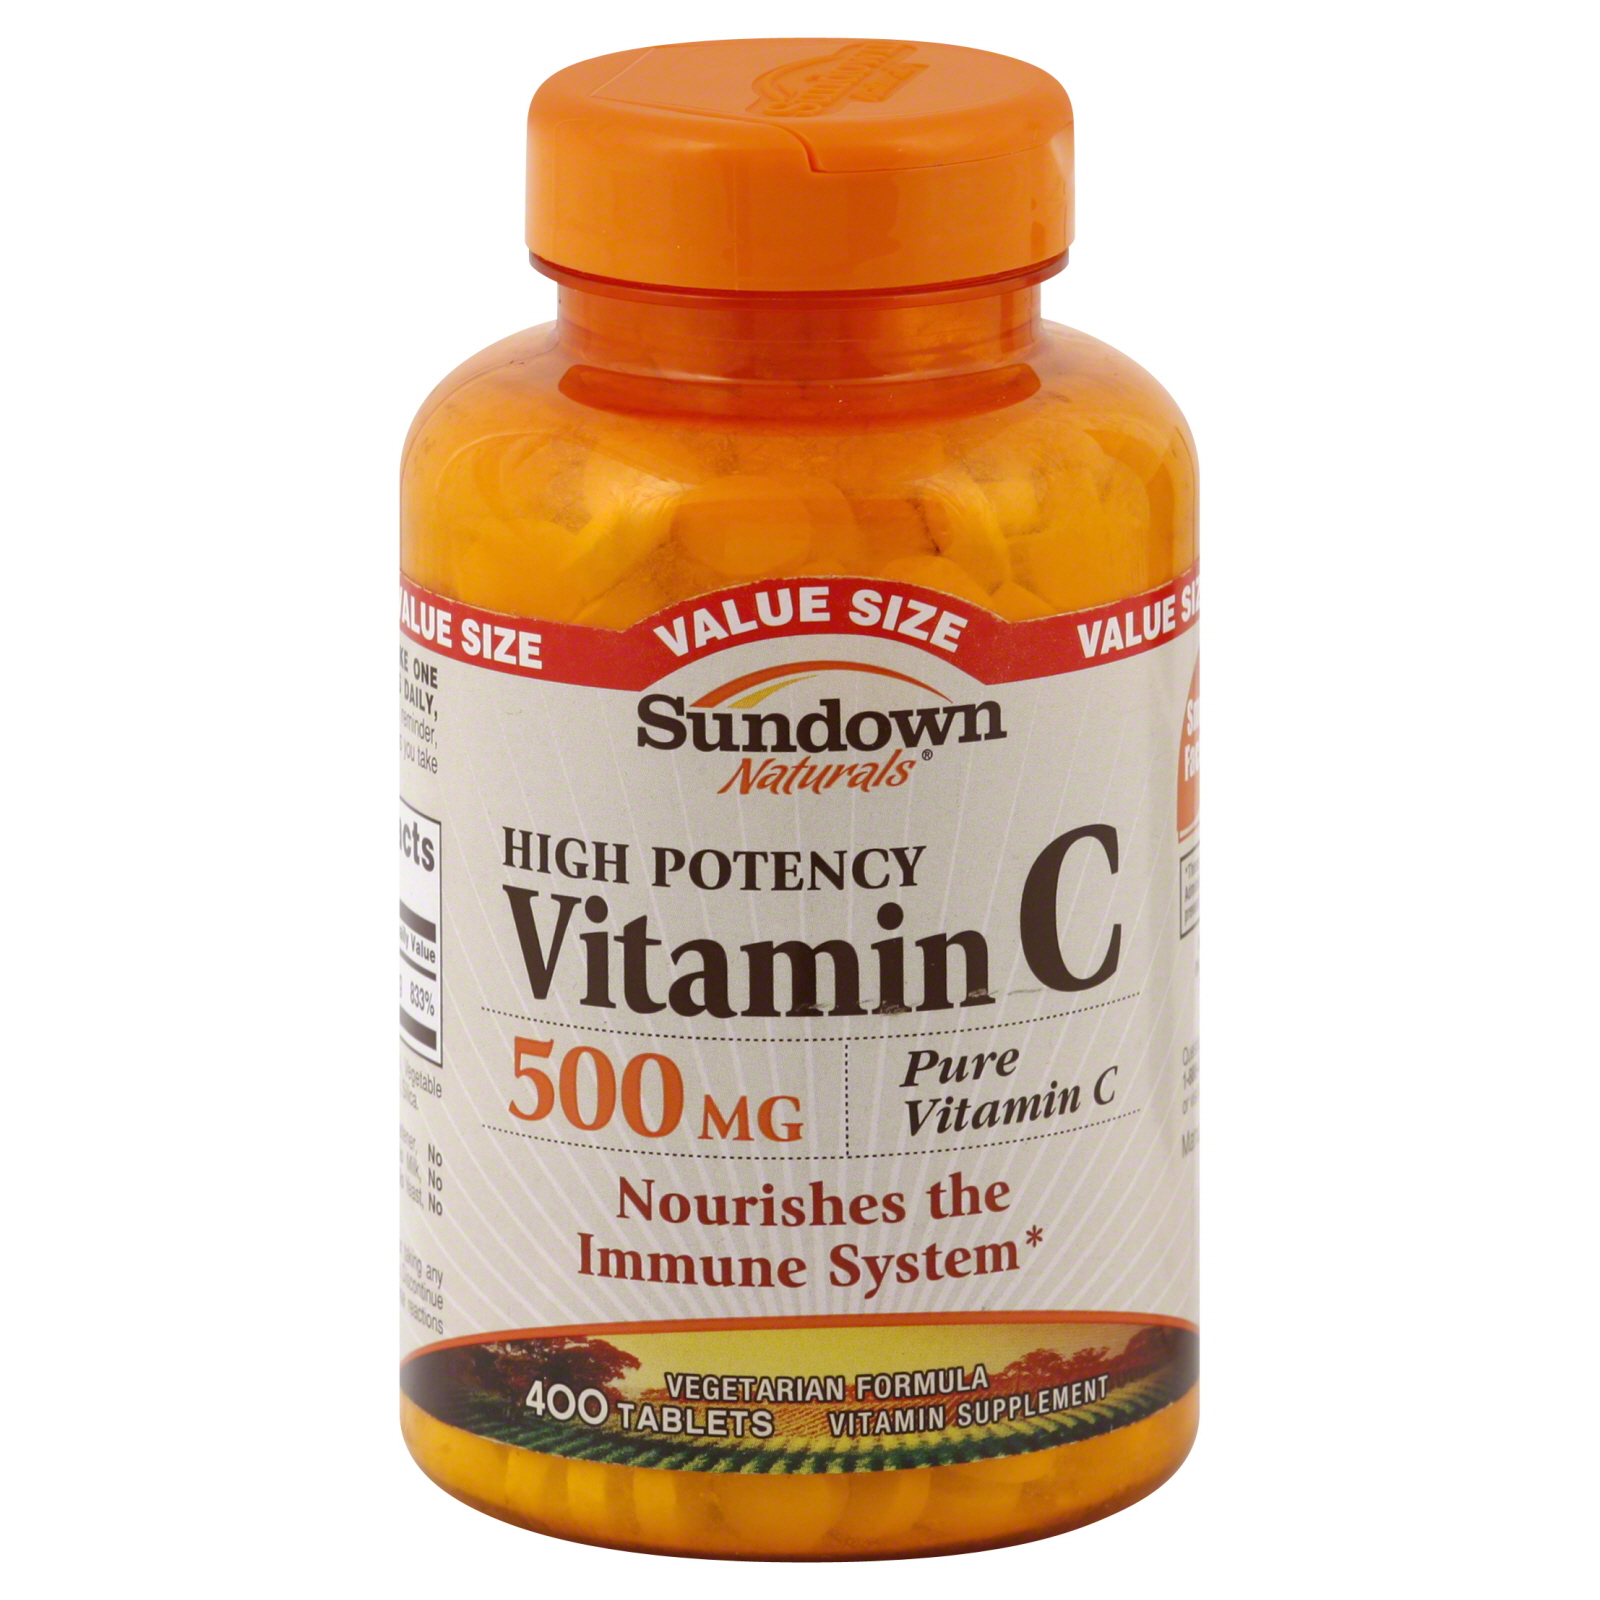 Sundown Naturals  Vitamin C, High Potency, 500 mg, Tablets, Value Size 400 tablets